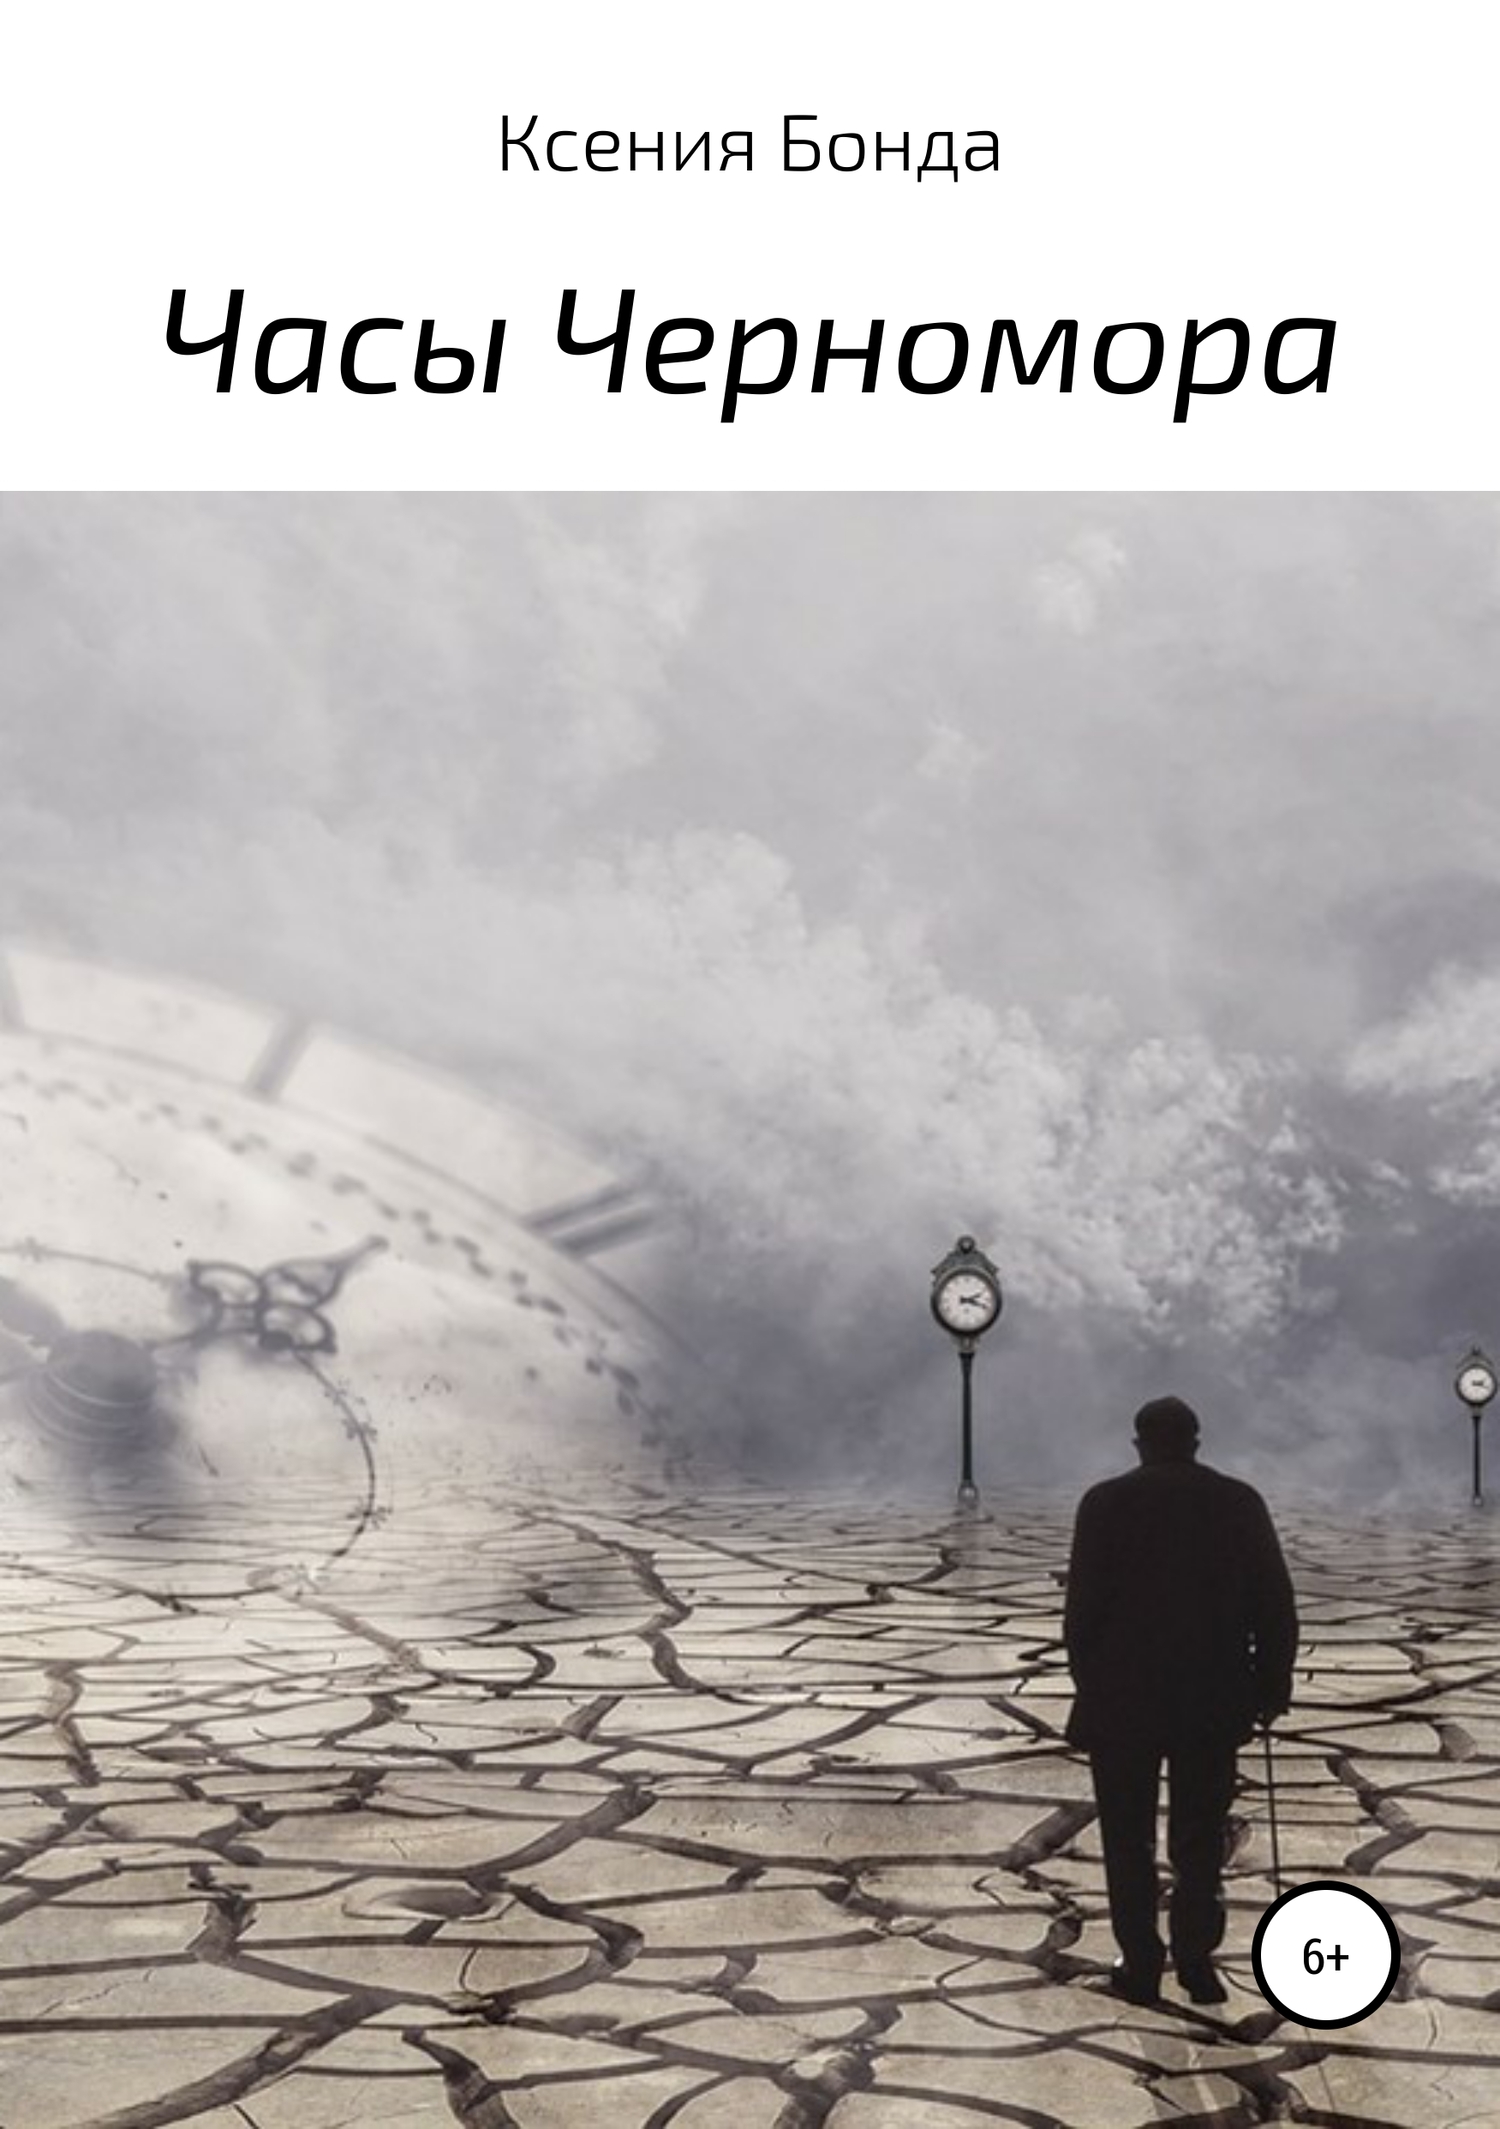 Часы Черномора - Ксения Бонда